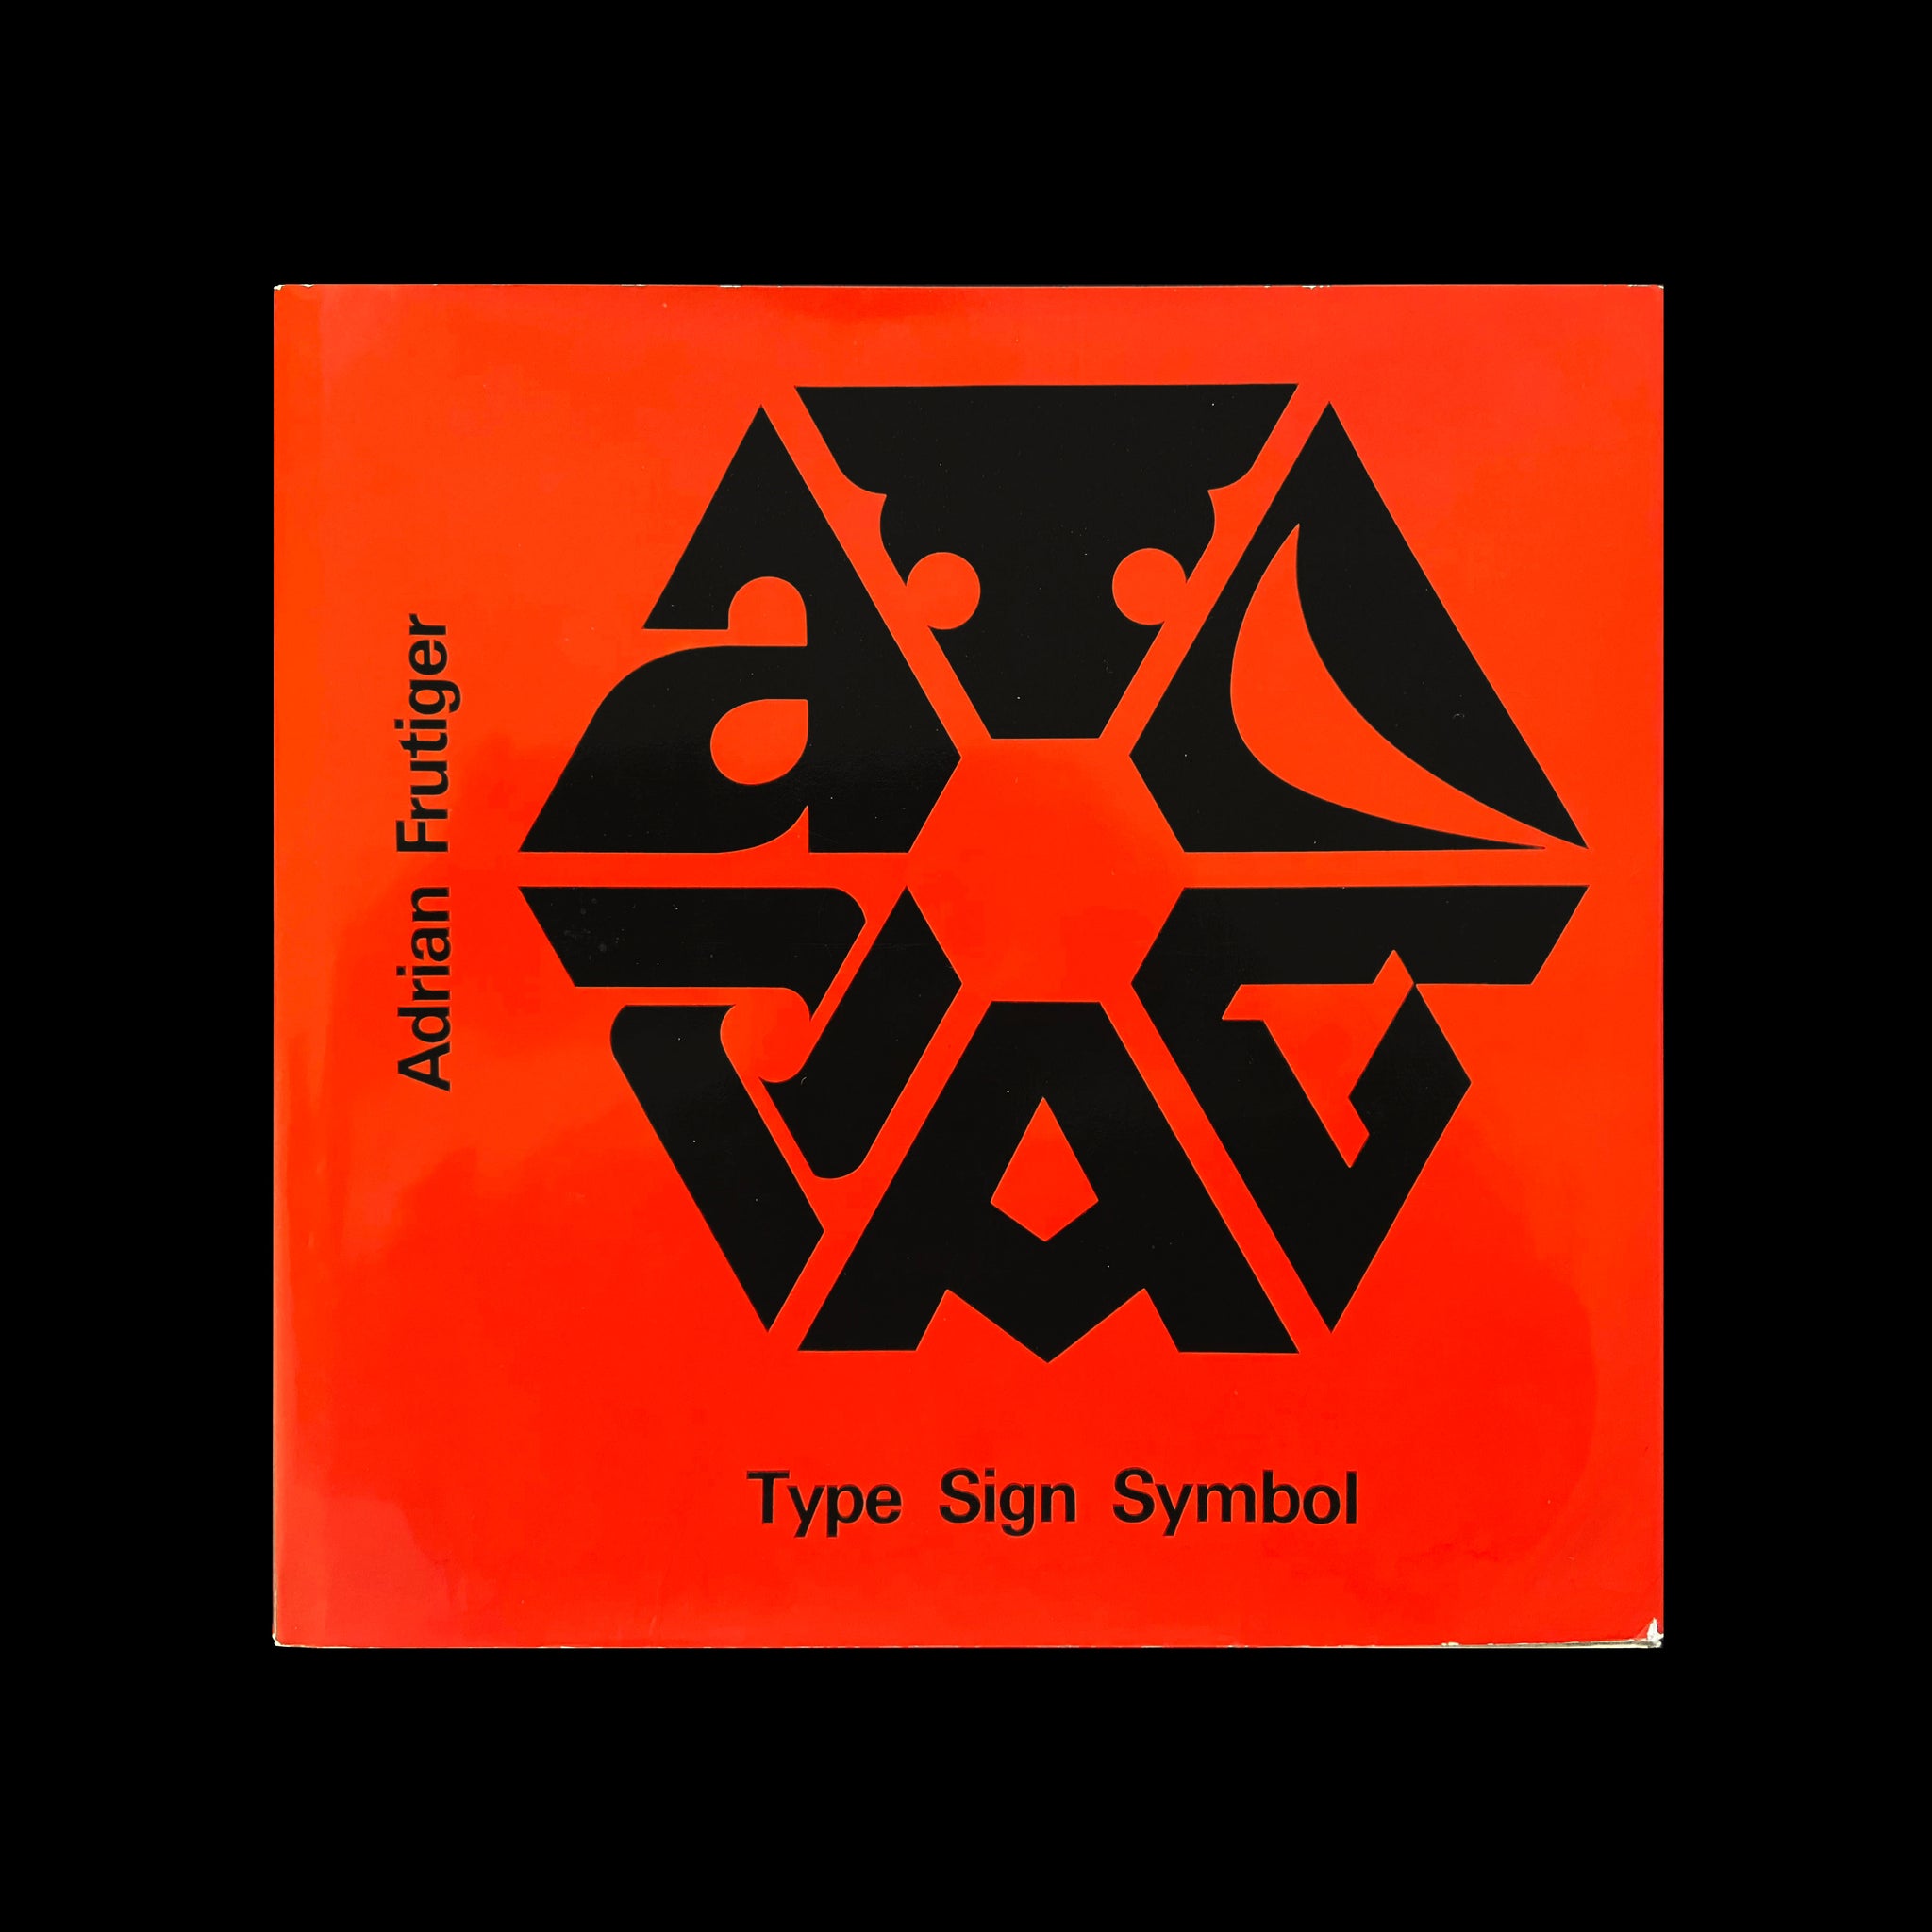 Type Sign Symbol, 1980 (Signed)